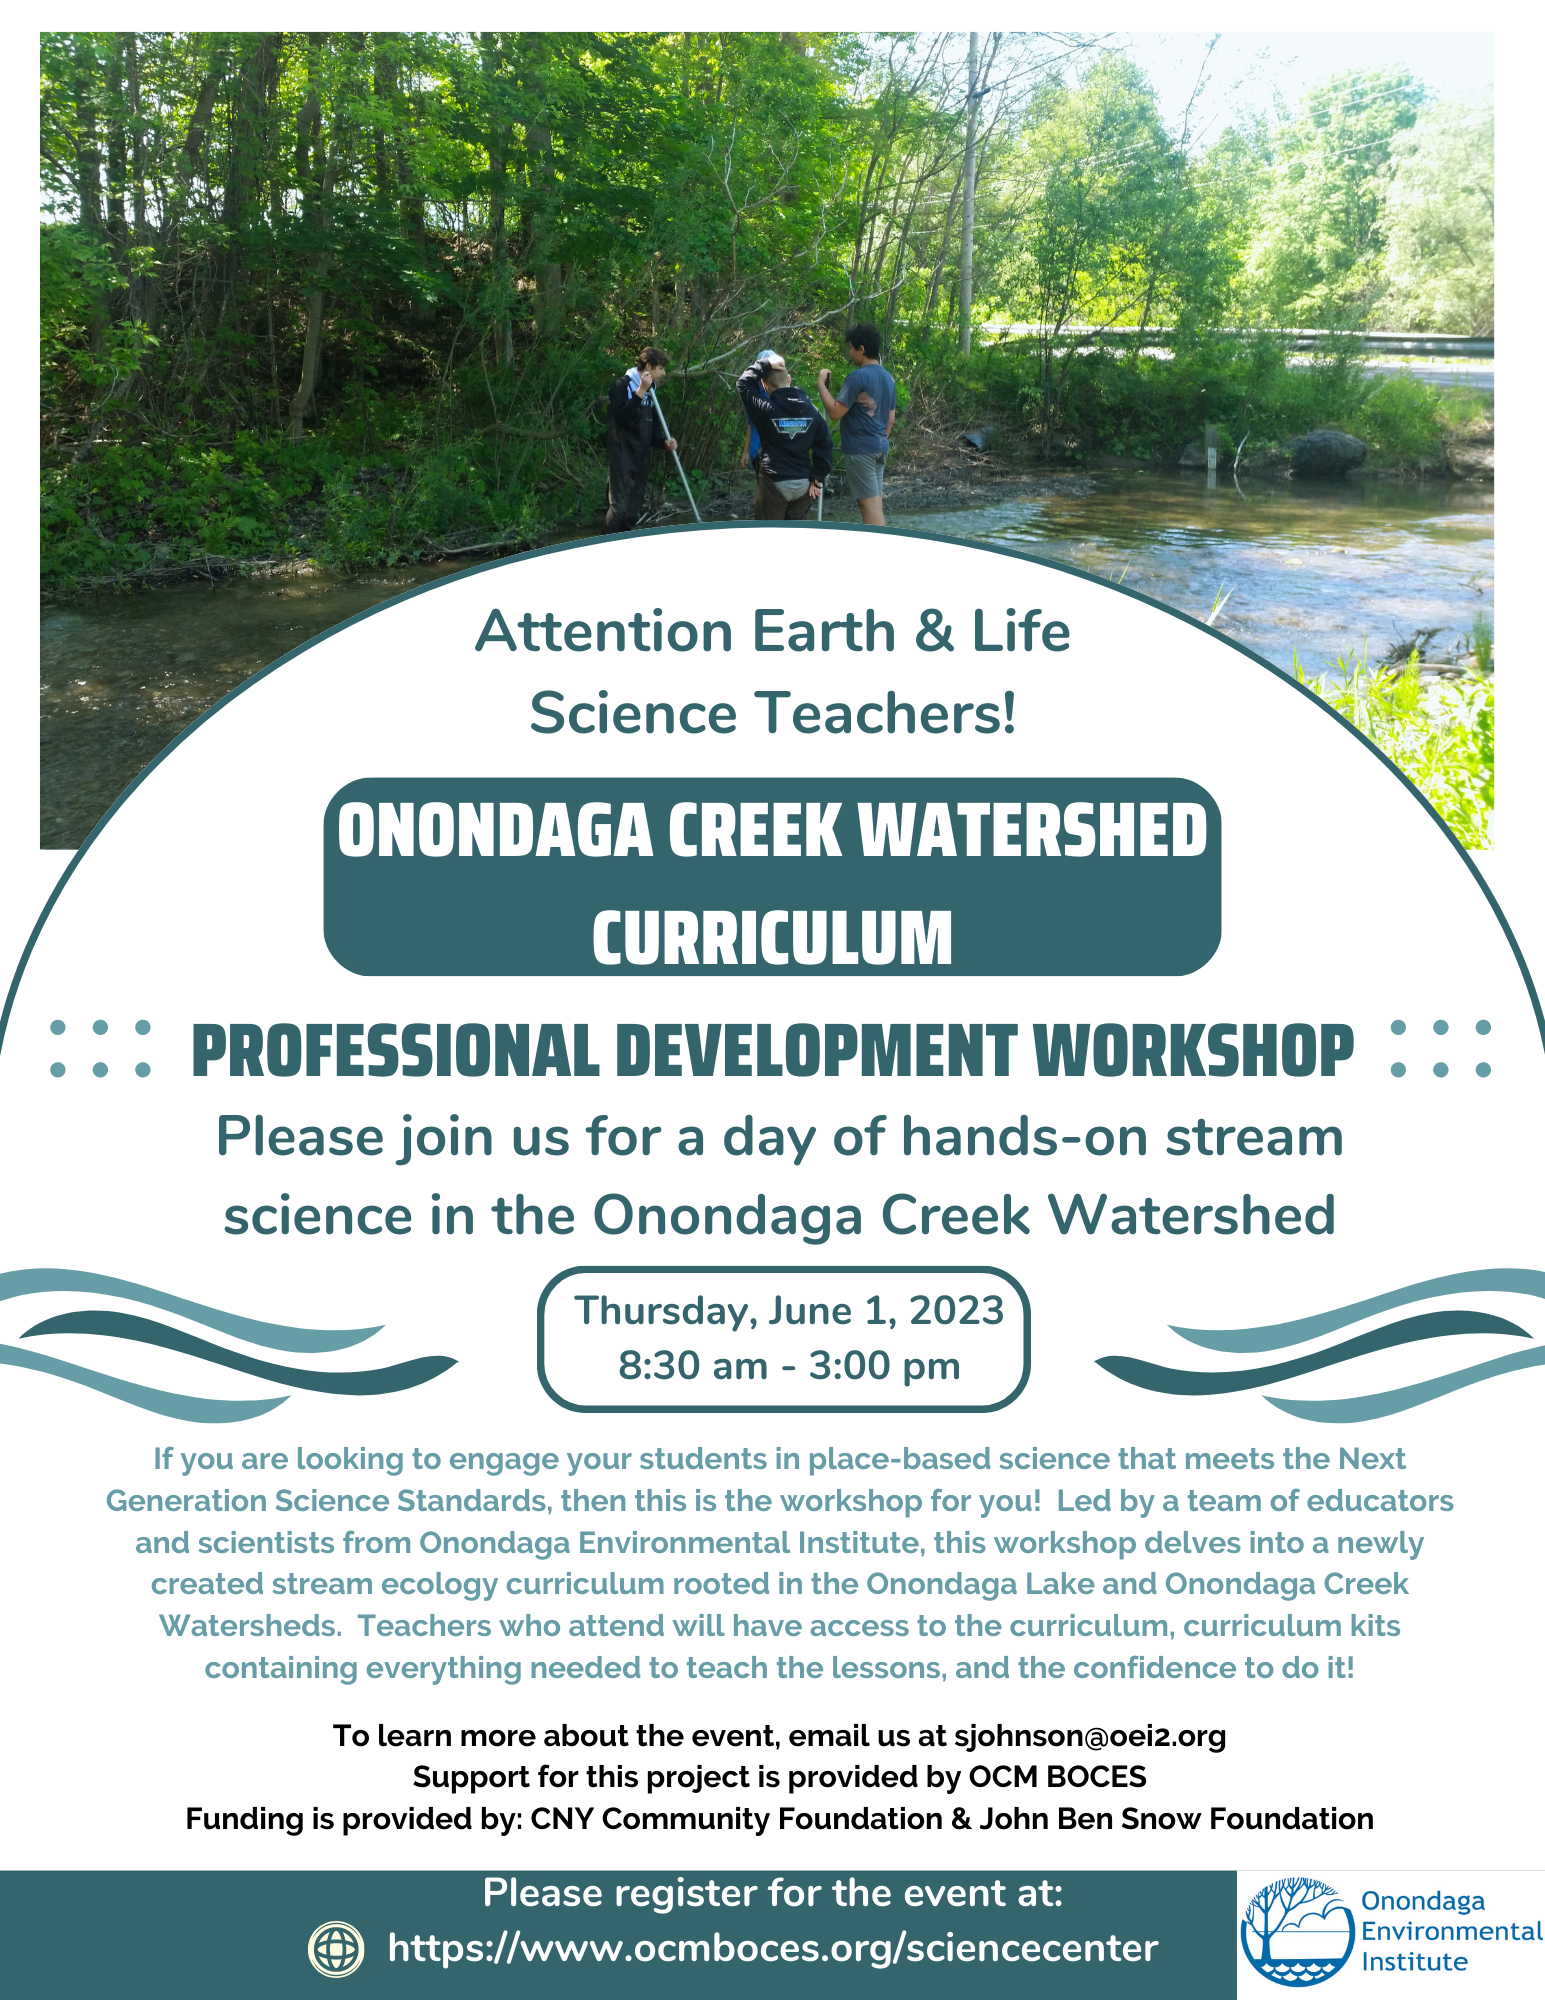 Hands-on Stream Science Onondaga Creek Watershed Curriculum Professional Development Workshop Flyer